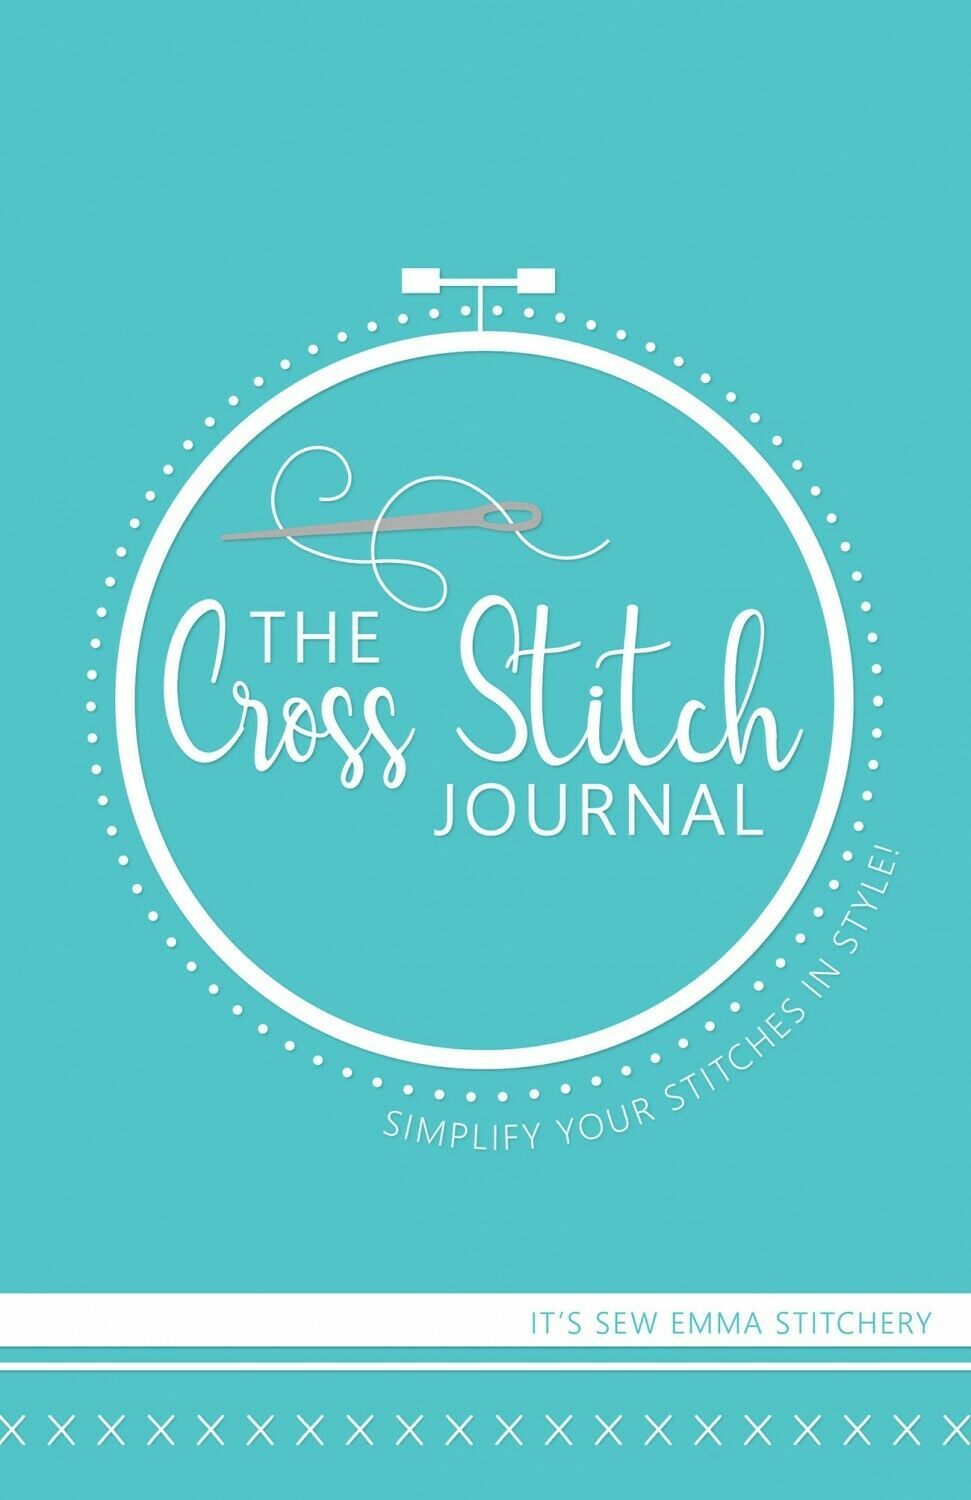 The Cross Stitch Journal by It's Sew Emma It's Sew Emma